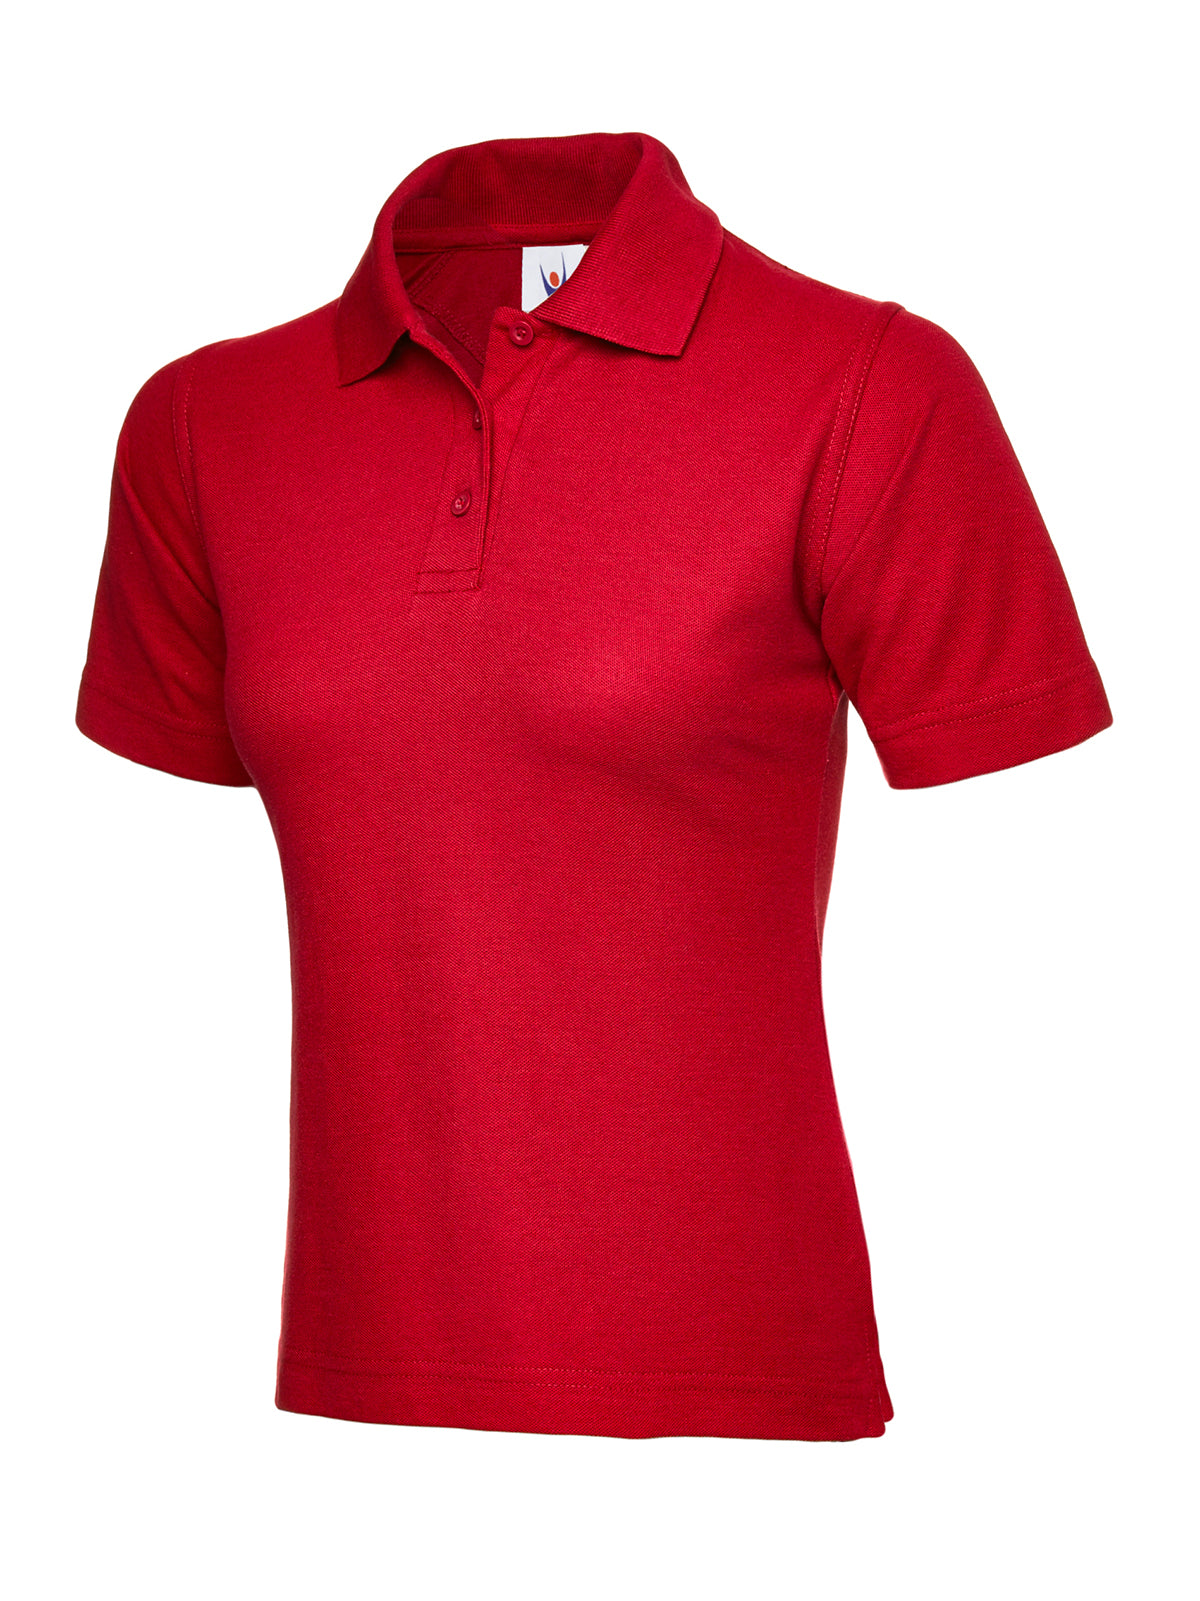 Uneek Ladies Classic Poloshirt UC106 - Red